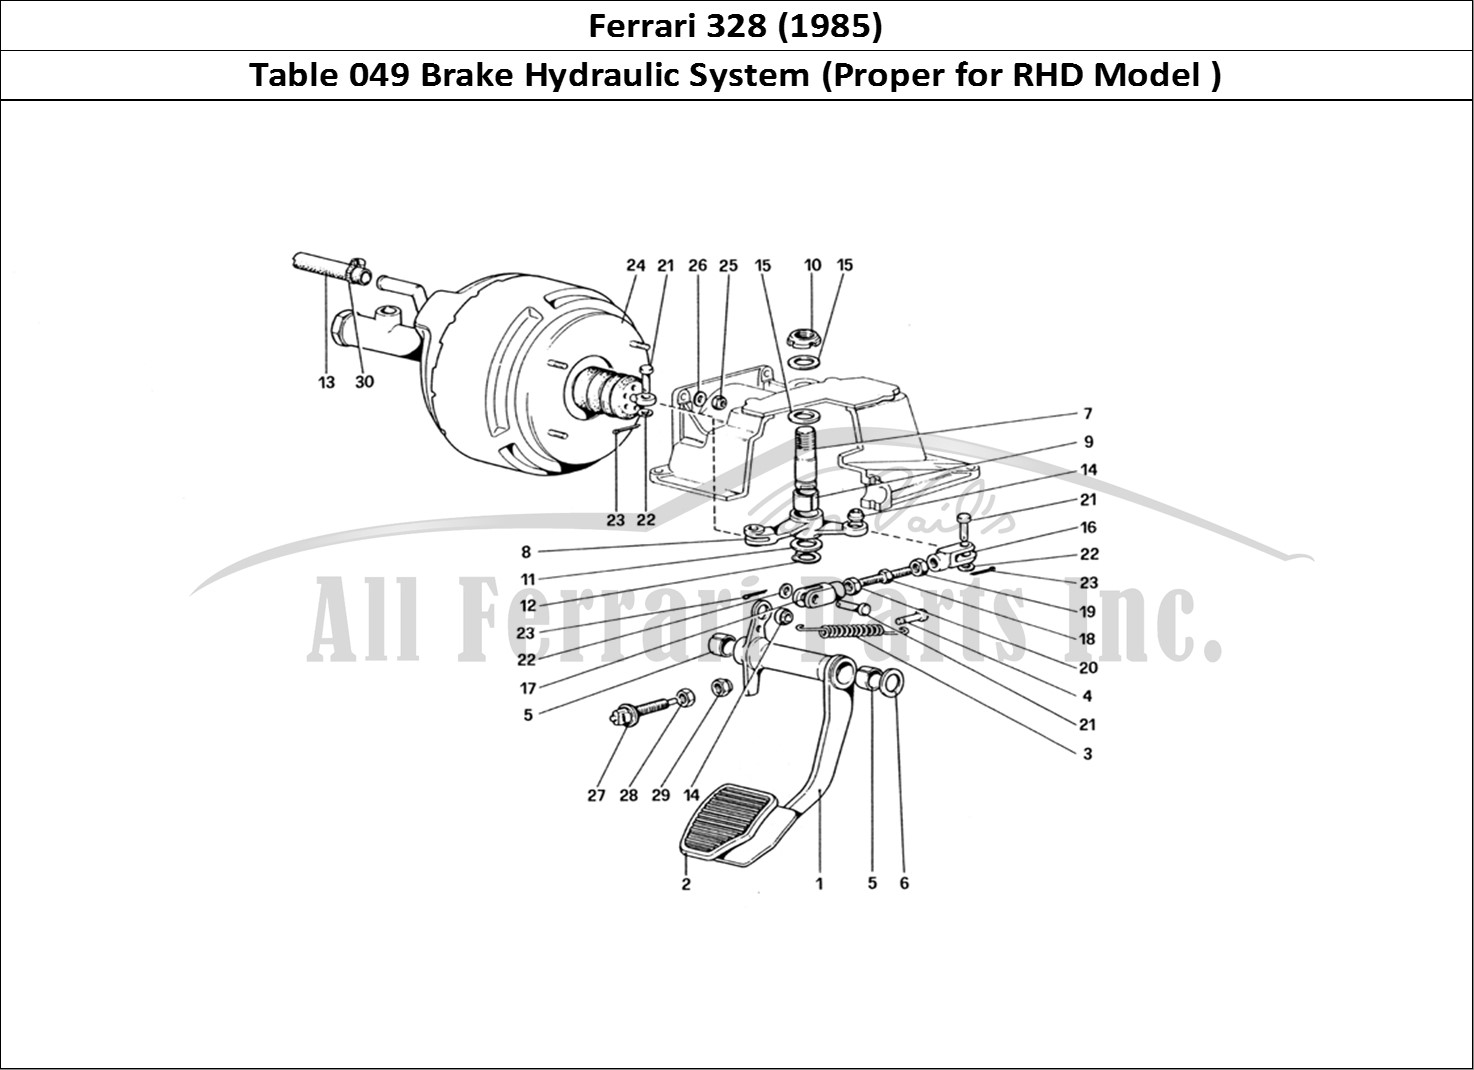 Ferrari Parts Ferrari 328 (1985) Page 049 Brake Hydraulic System (V